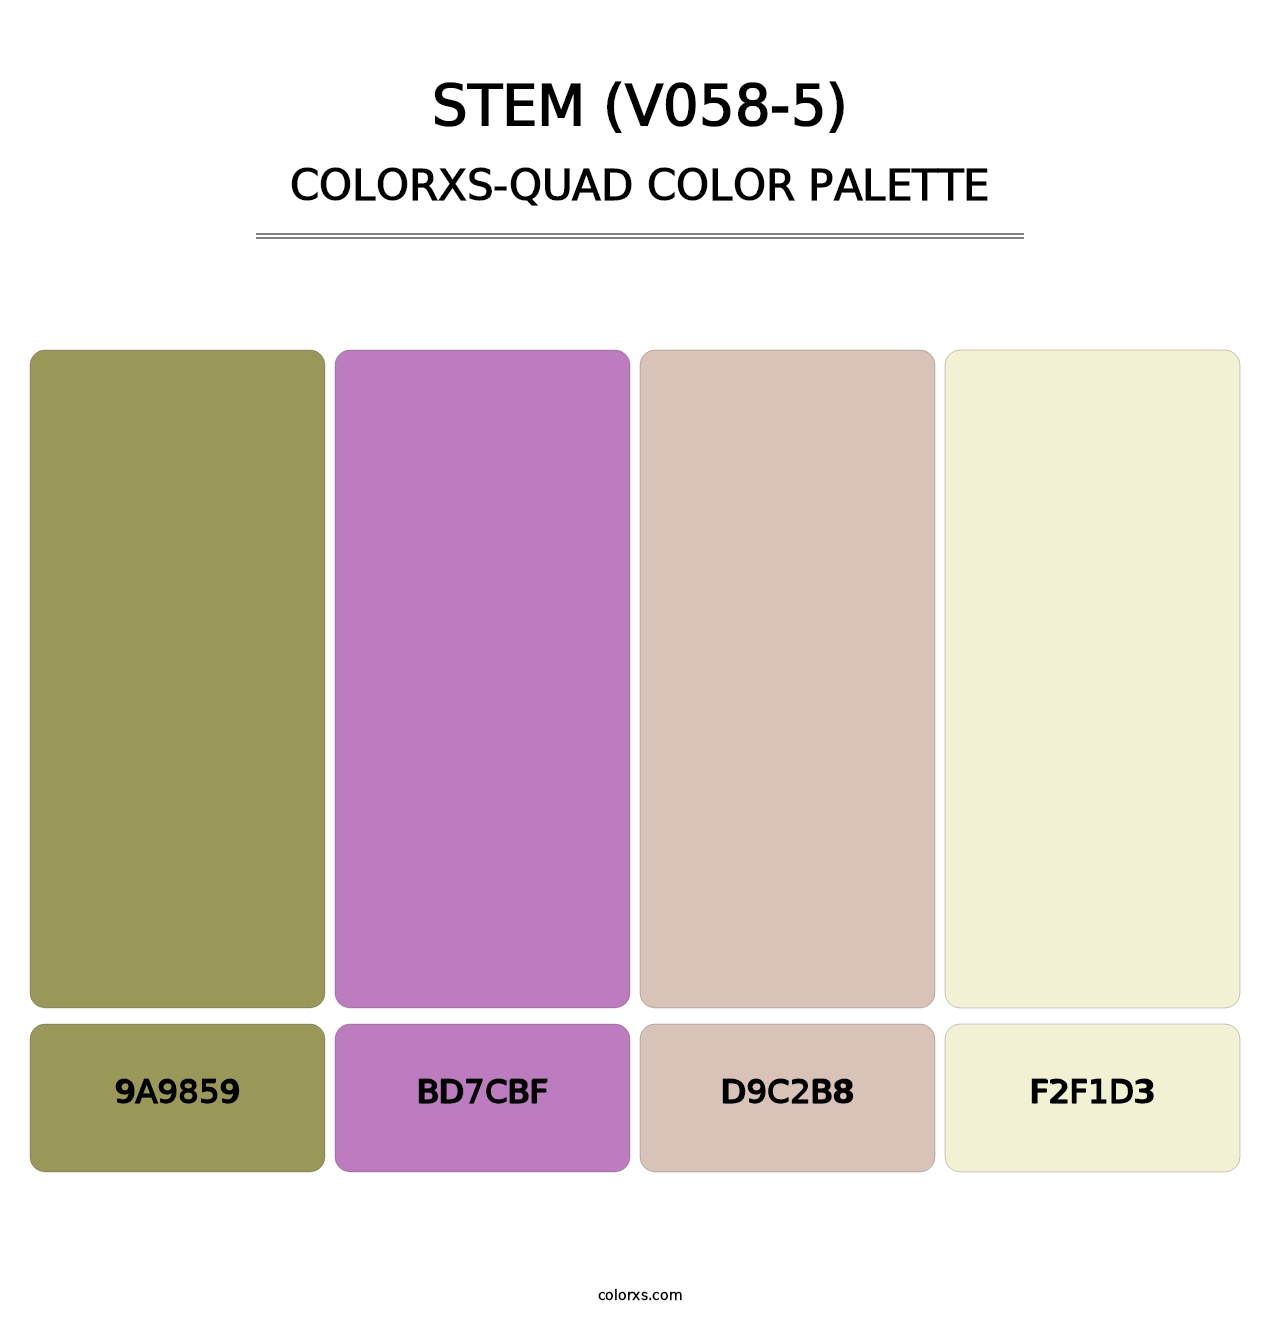 Stem (V058-5) - Colorxs Quad Palette